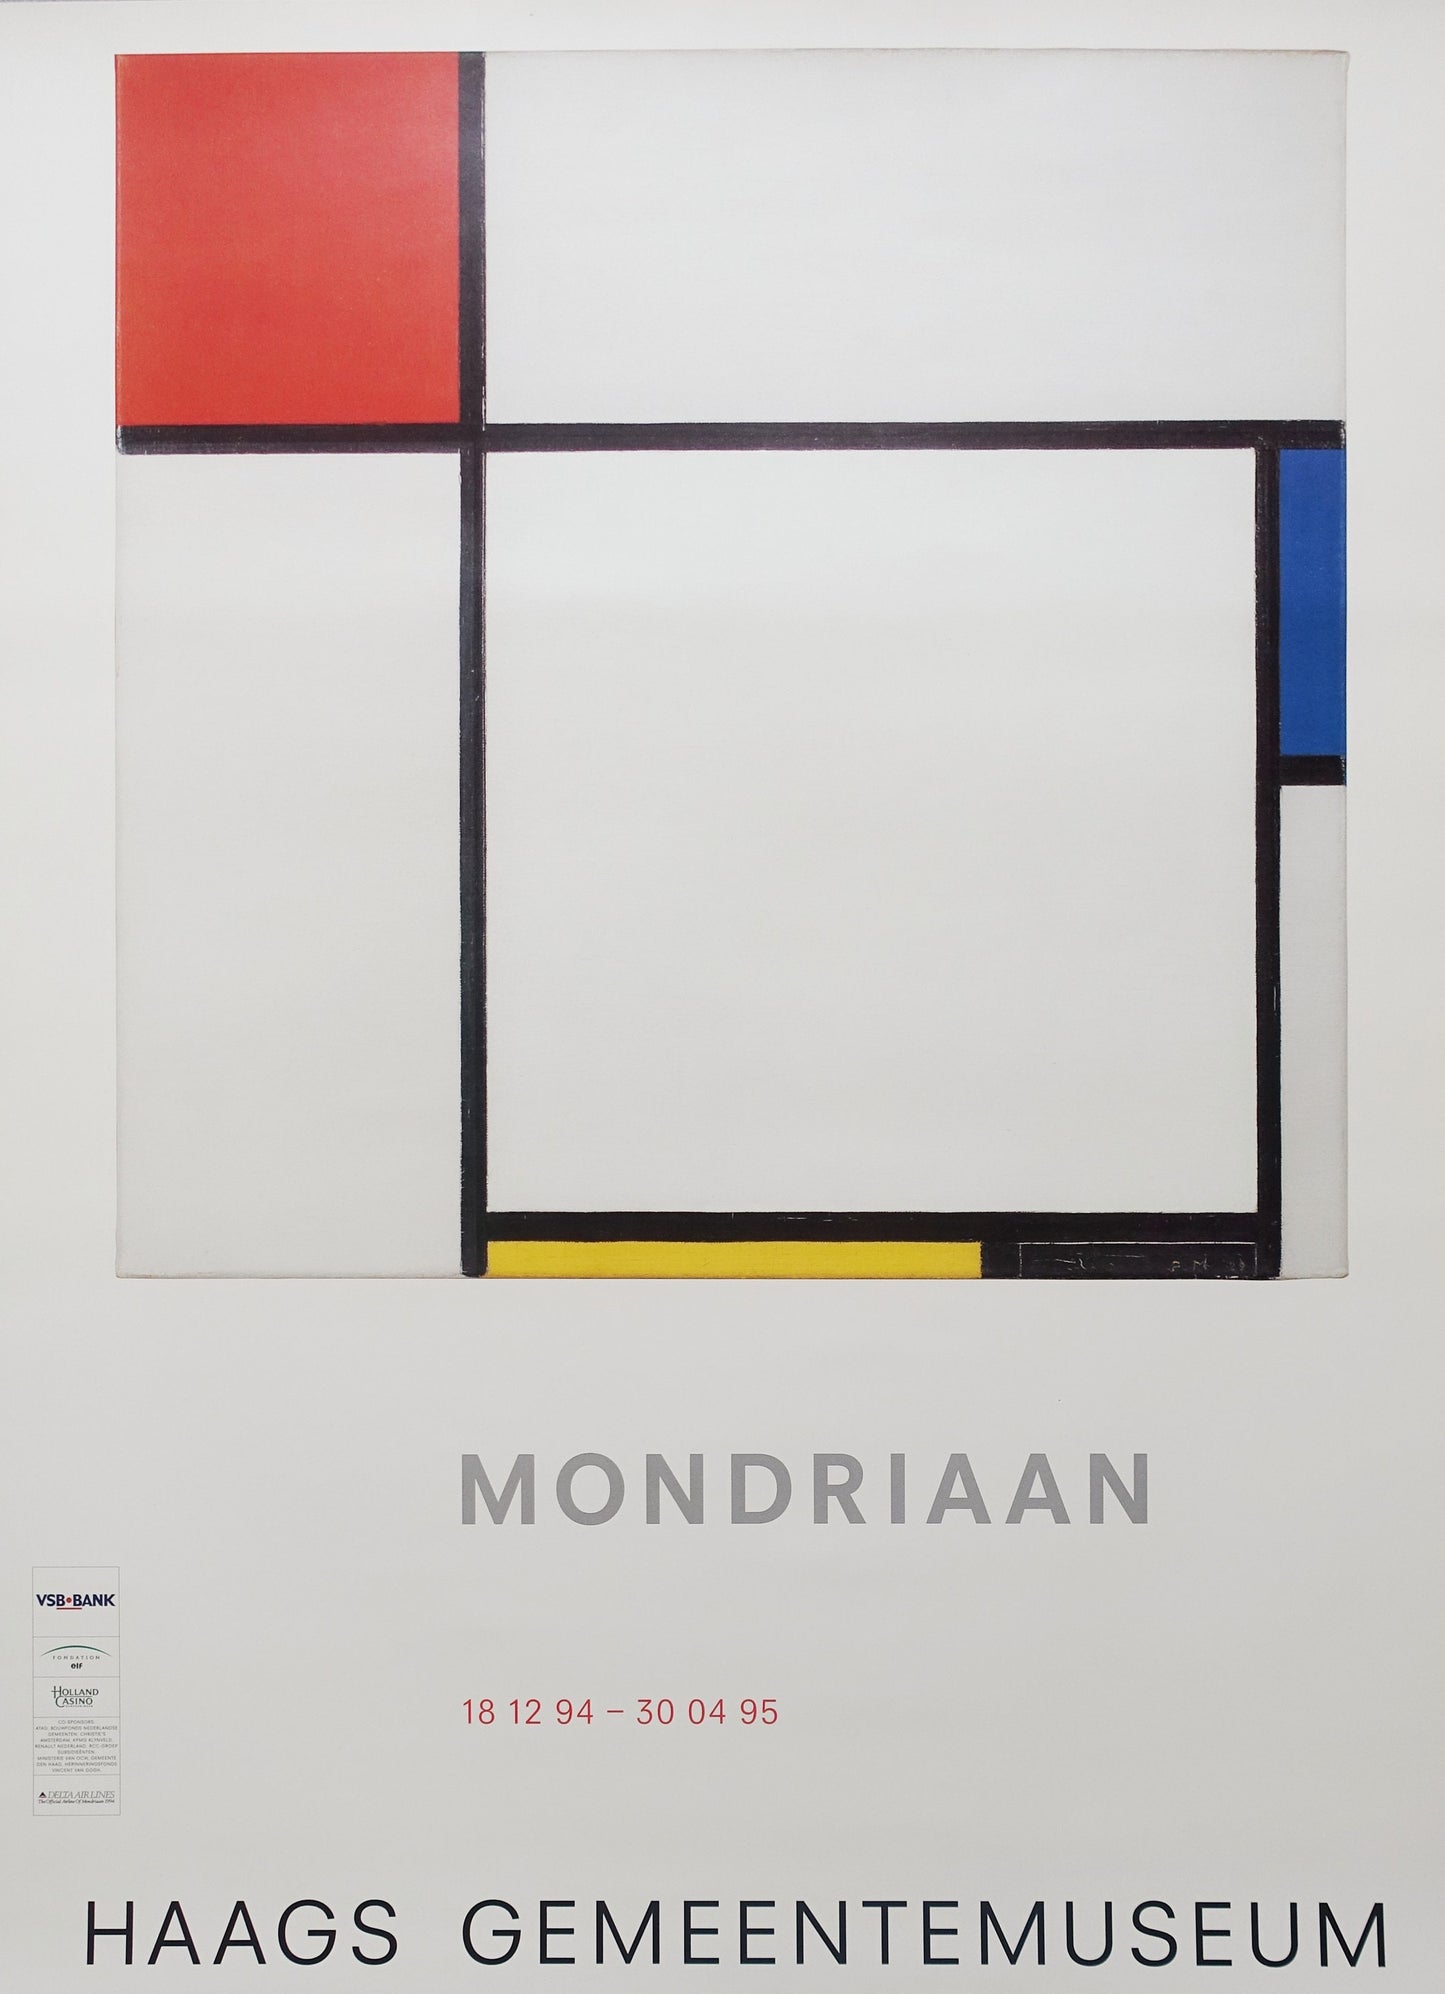 1995 Mondrian Haag Exhibition Poster - Original Vintage Poster